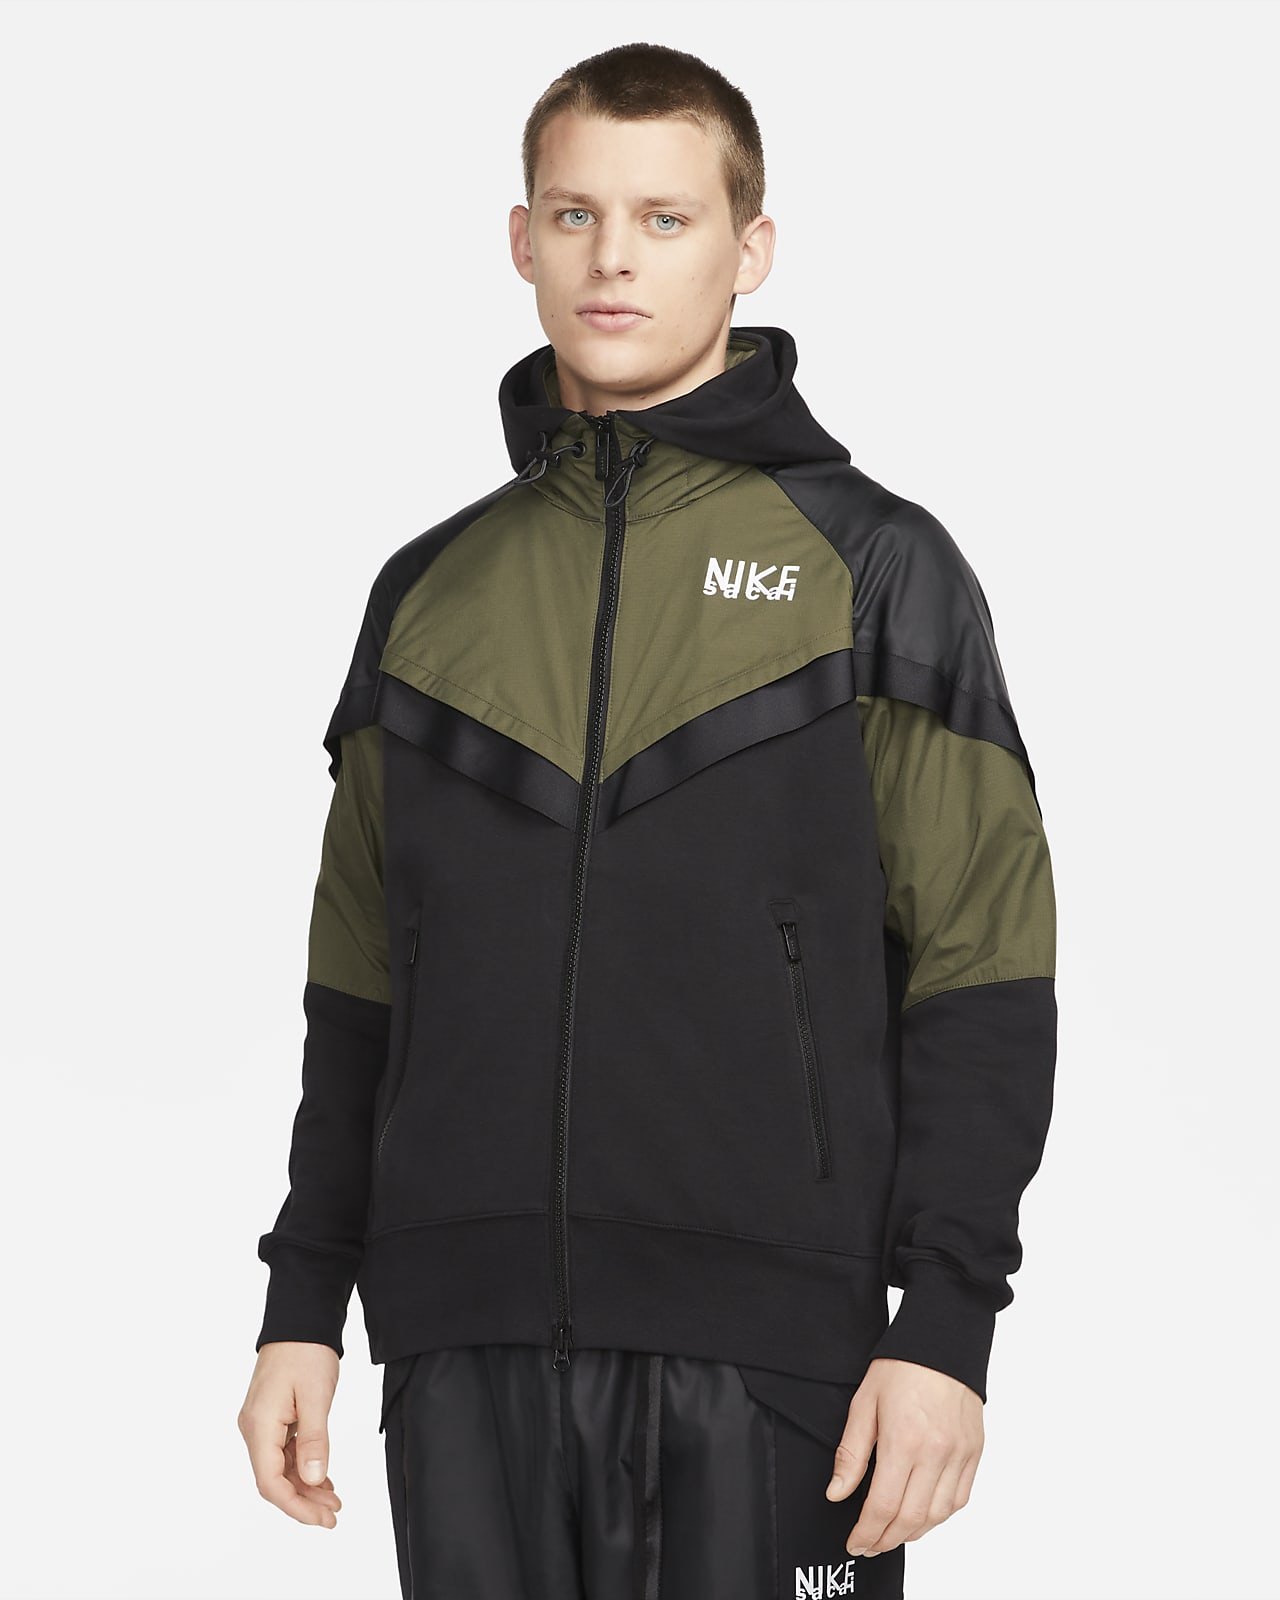 NIKE sacai ジャケット hooded パーカー jacket M | myglobaltax.com